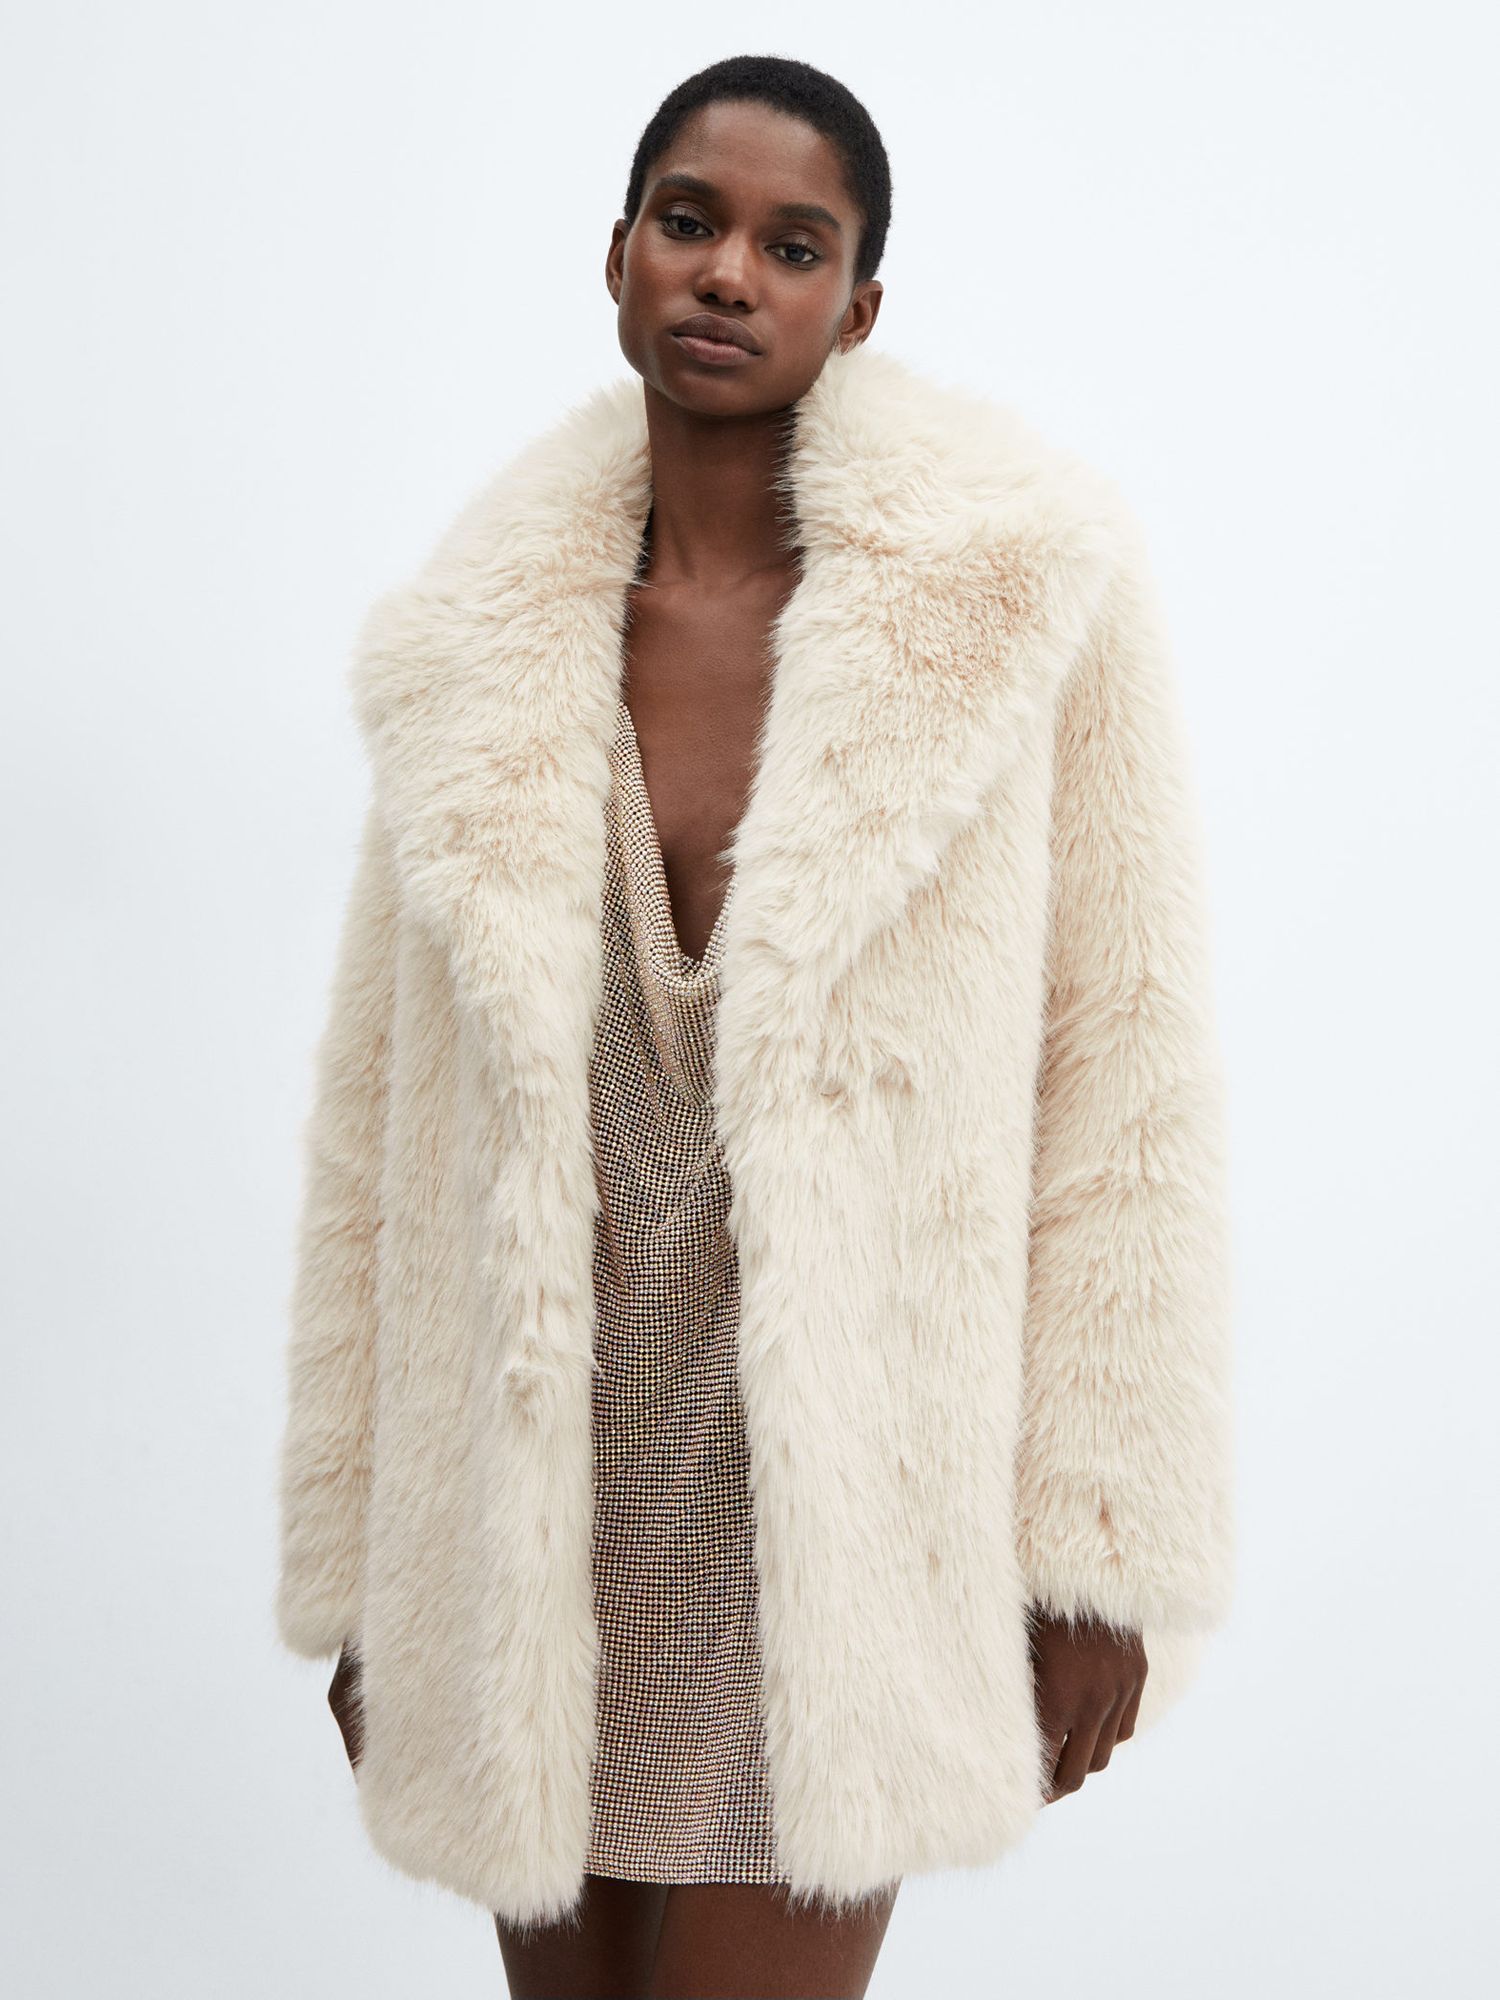 Topshop Petite faux fur coat in cream Size 8 Uk